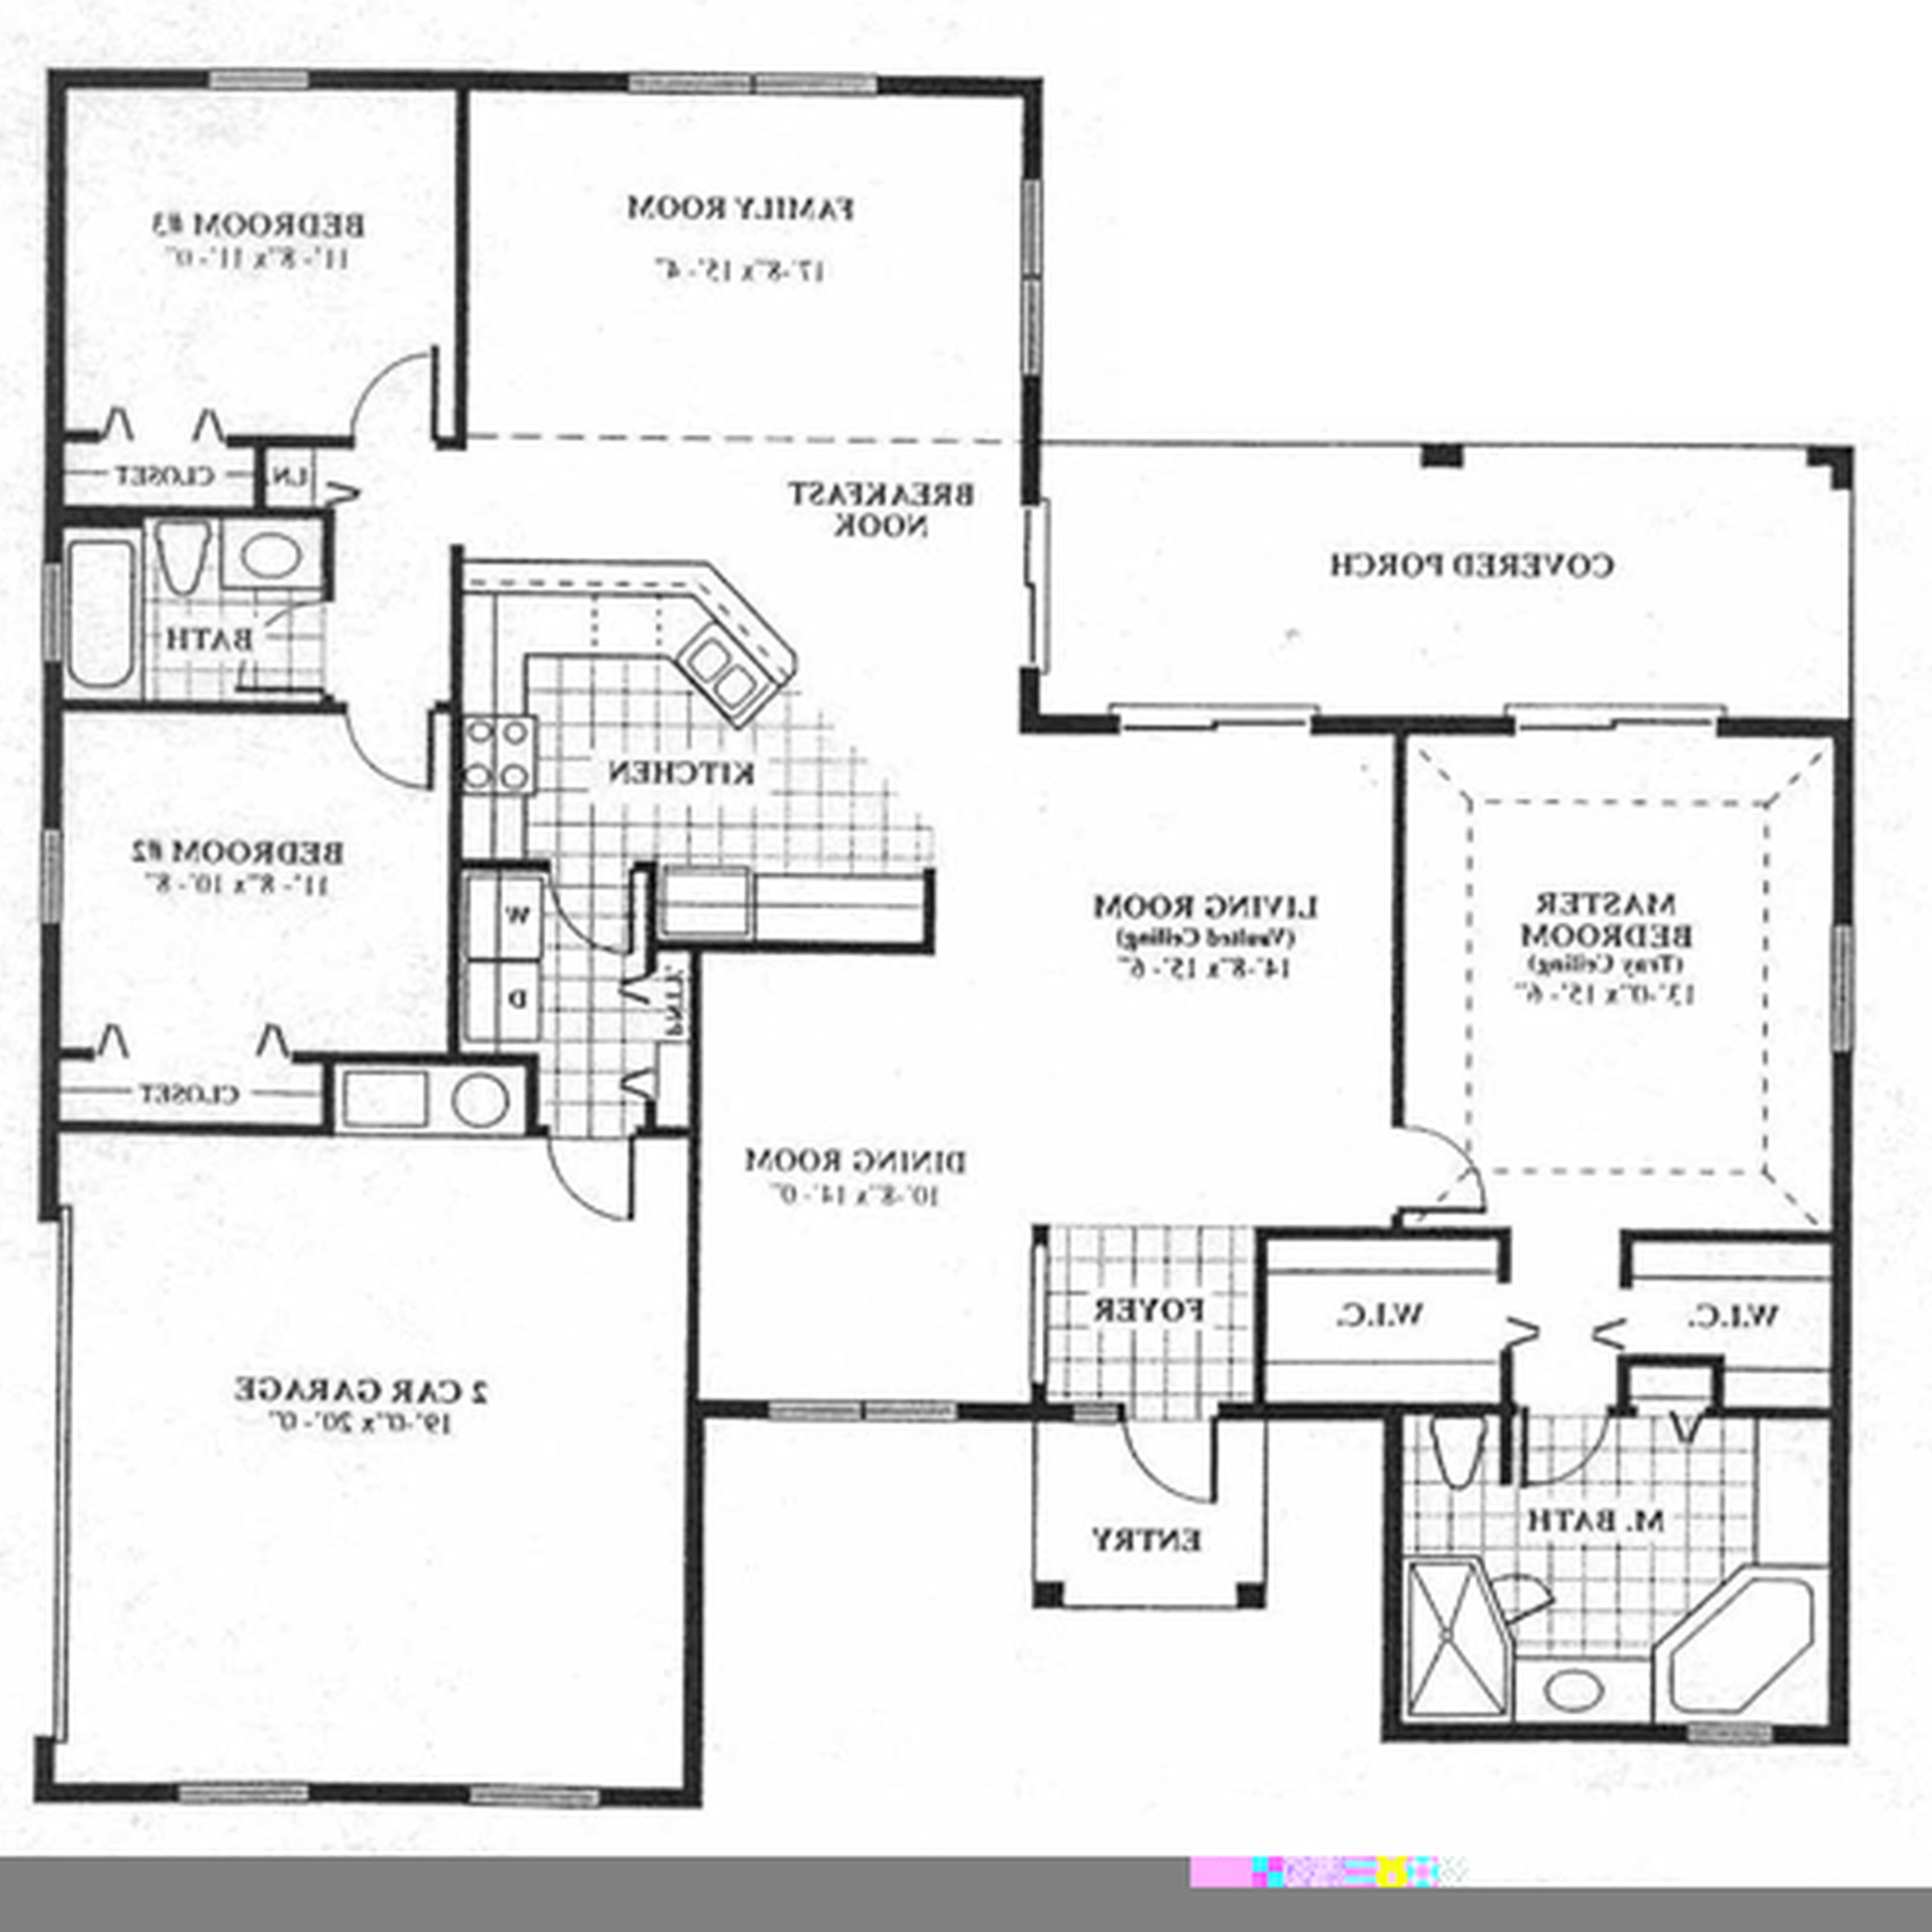 Interior House Design Floor Plans